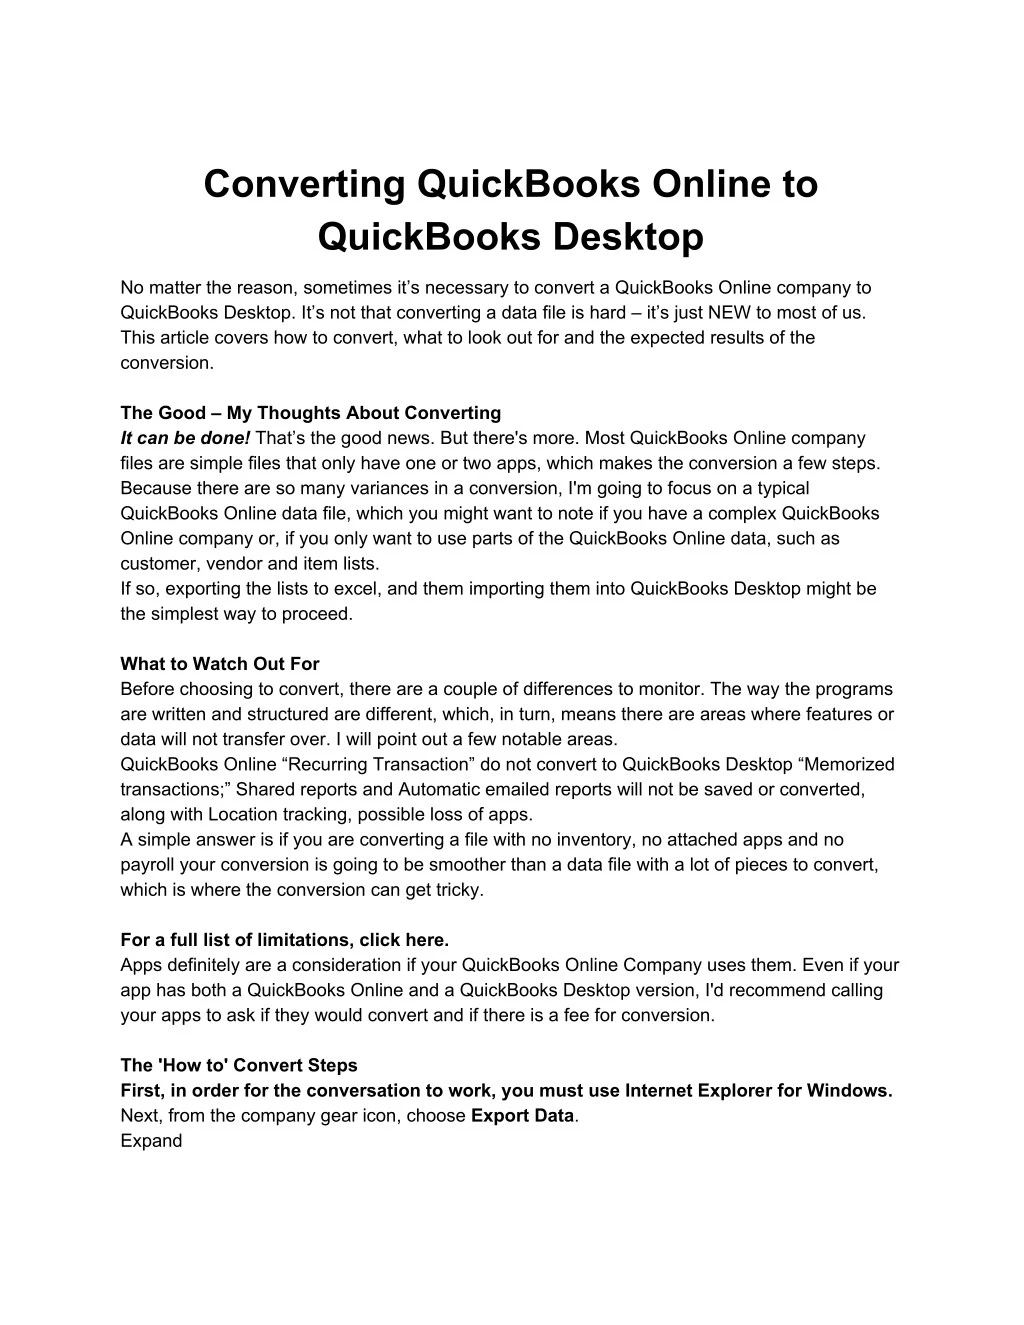 converting quickbooks online to quickbooks desktop